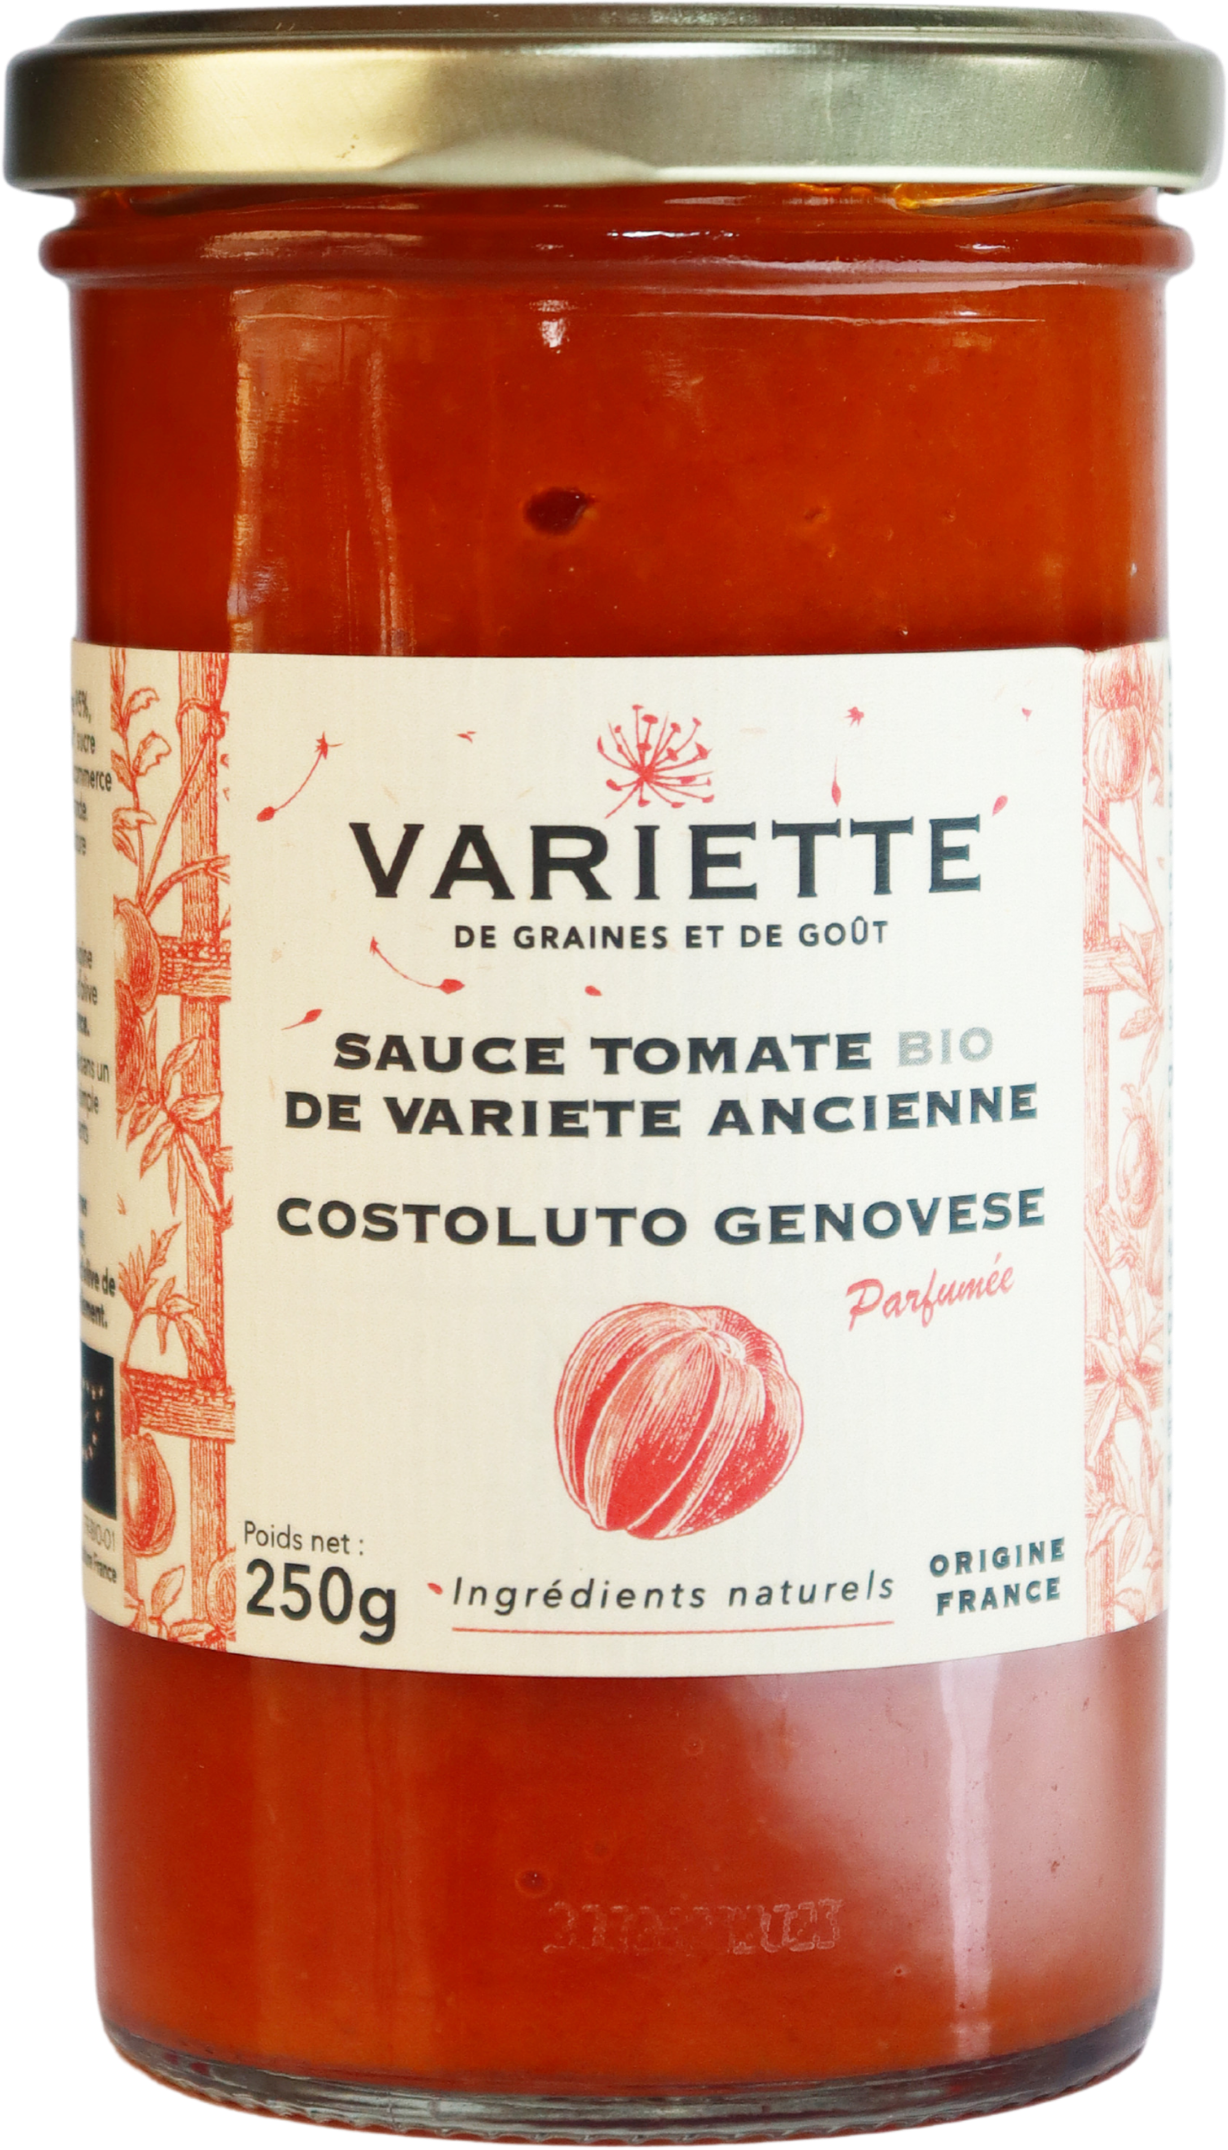 Sauce tomate Costoluto Genovese